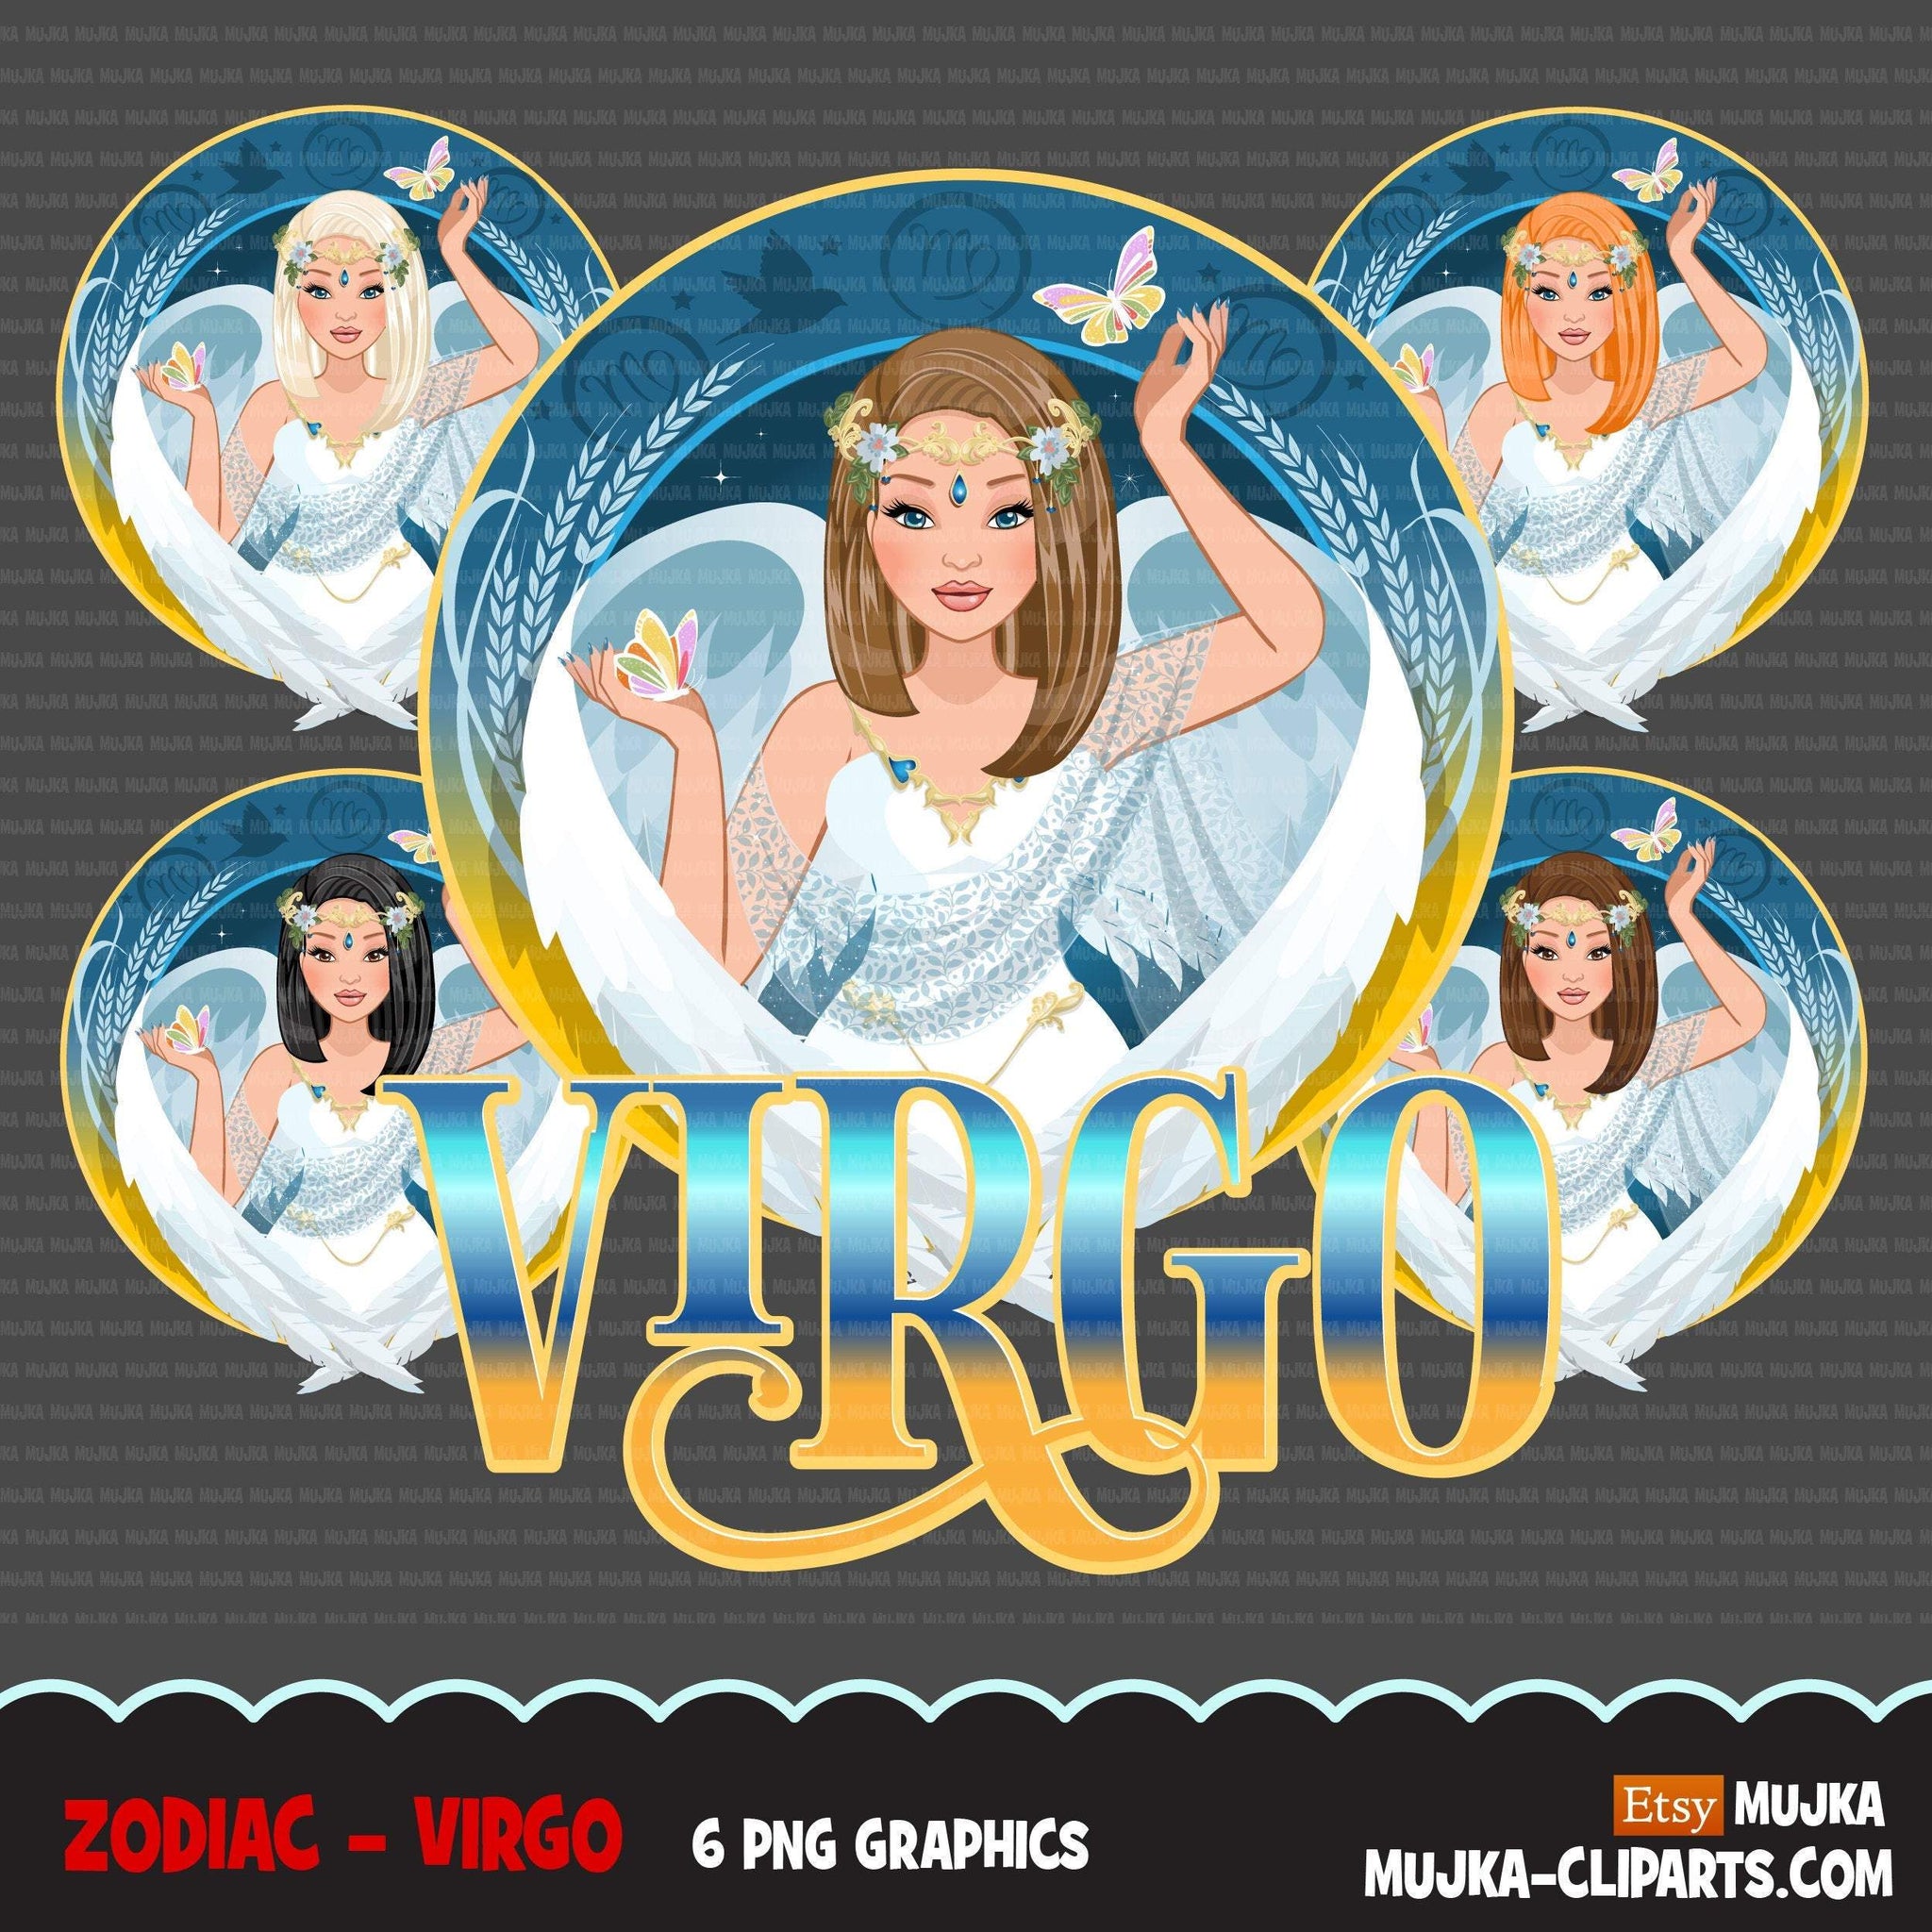 Zodiac Virgo Clipart, Descarga digital Png, Gráficos de sublimación para Cricut &amp; Cameo, diseños de signos del horóscopo de mujer de cabello lacio caucásico